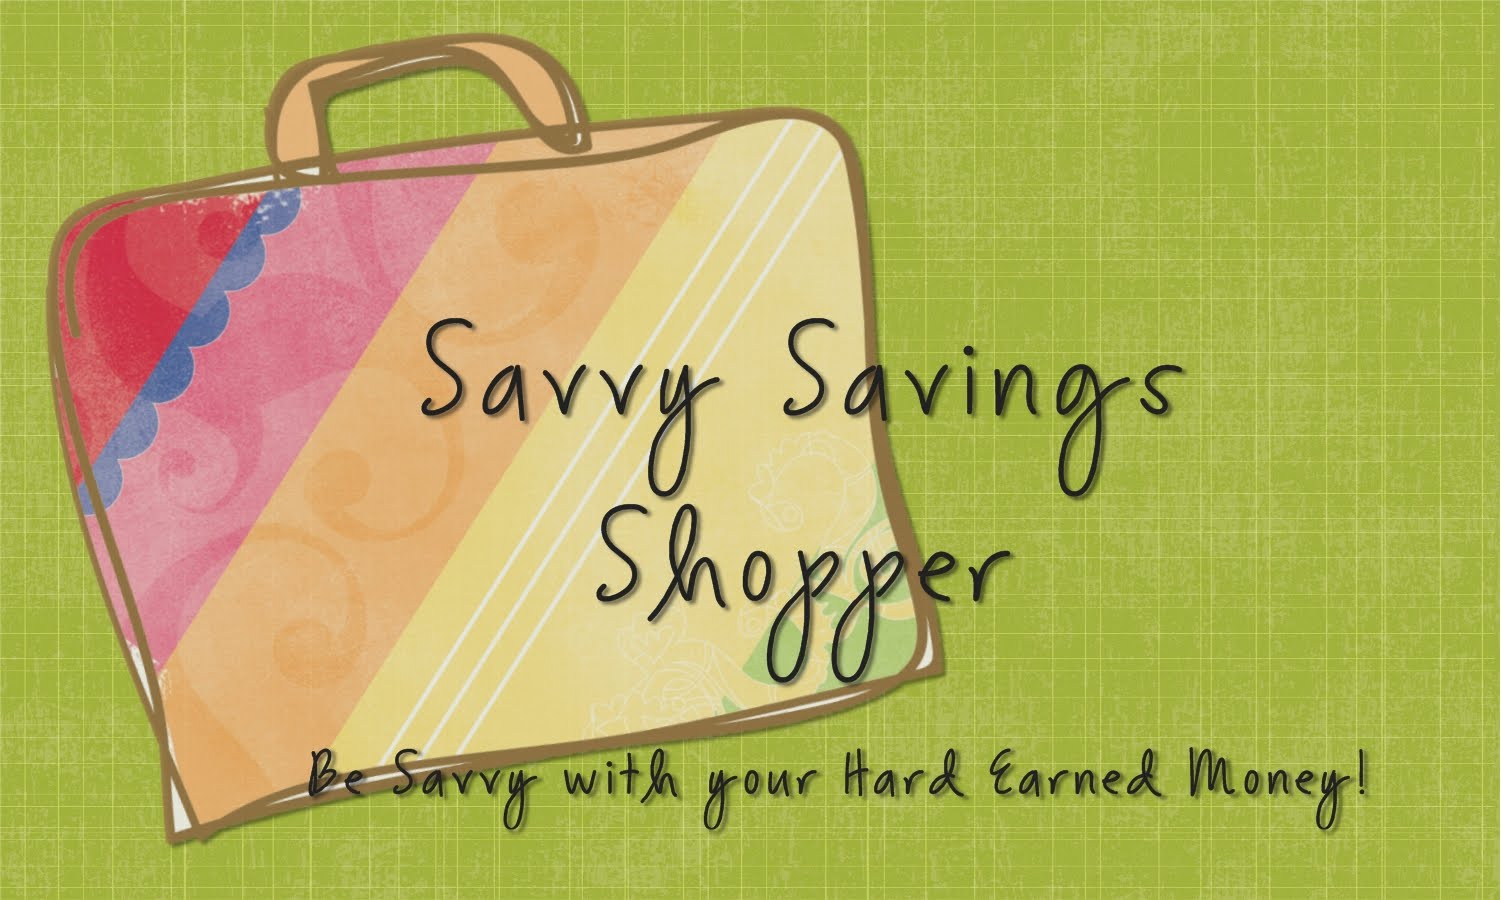 Savvy Savings Shopper